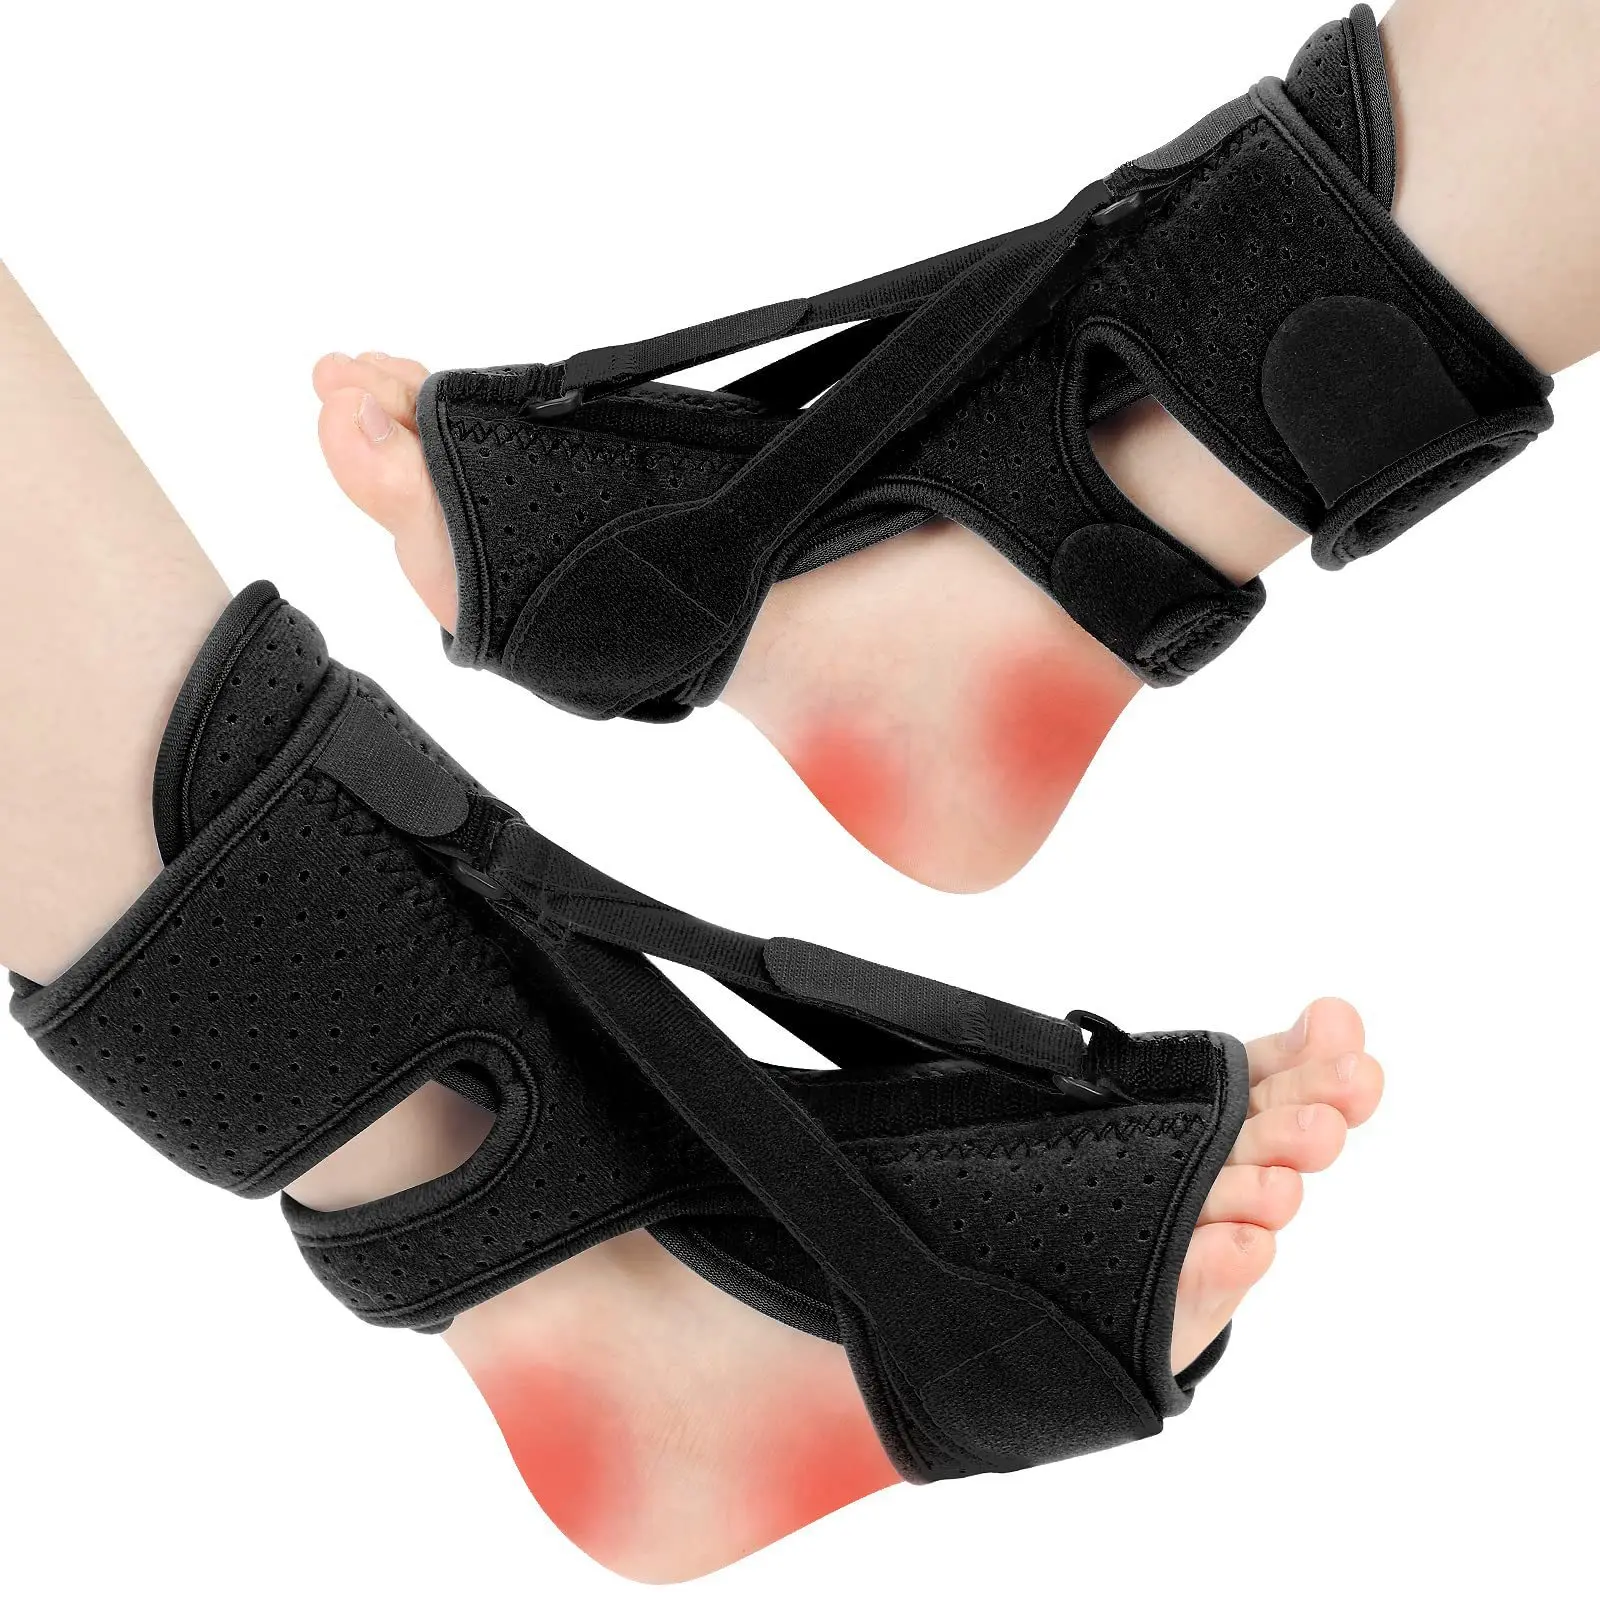 Black adjustable ankle brace lace up ankle support Neoprene Ankle Foot Orthosi Brace wrist support splint brace